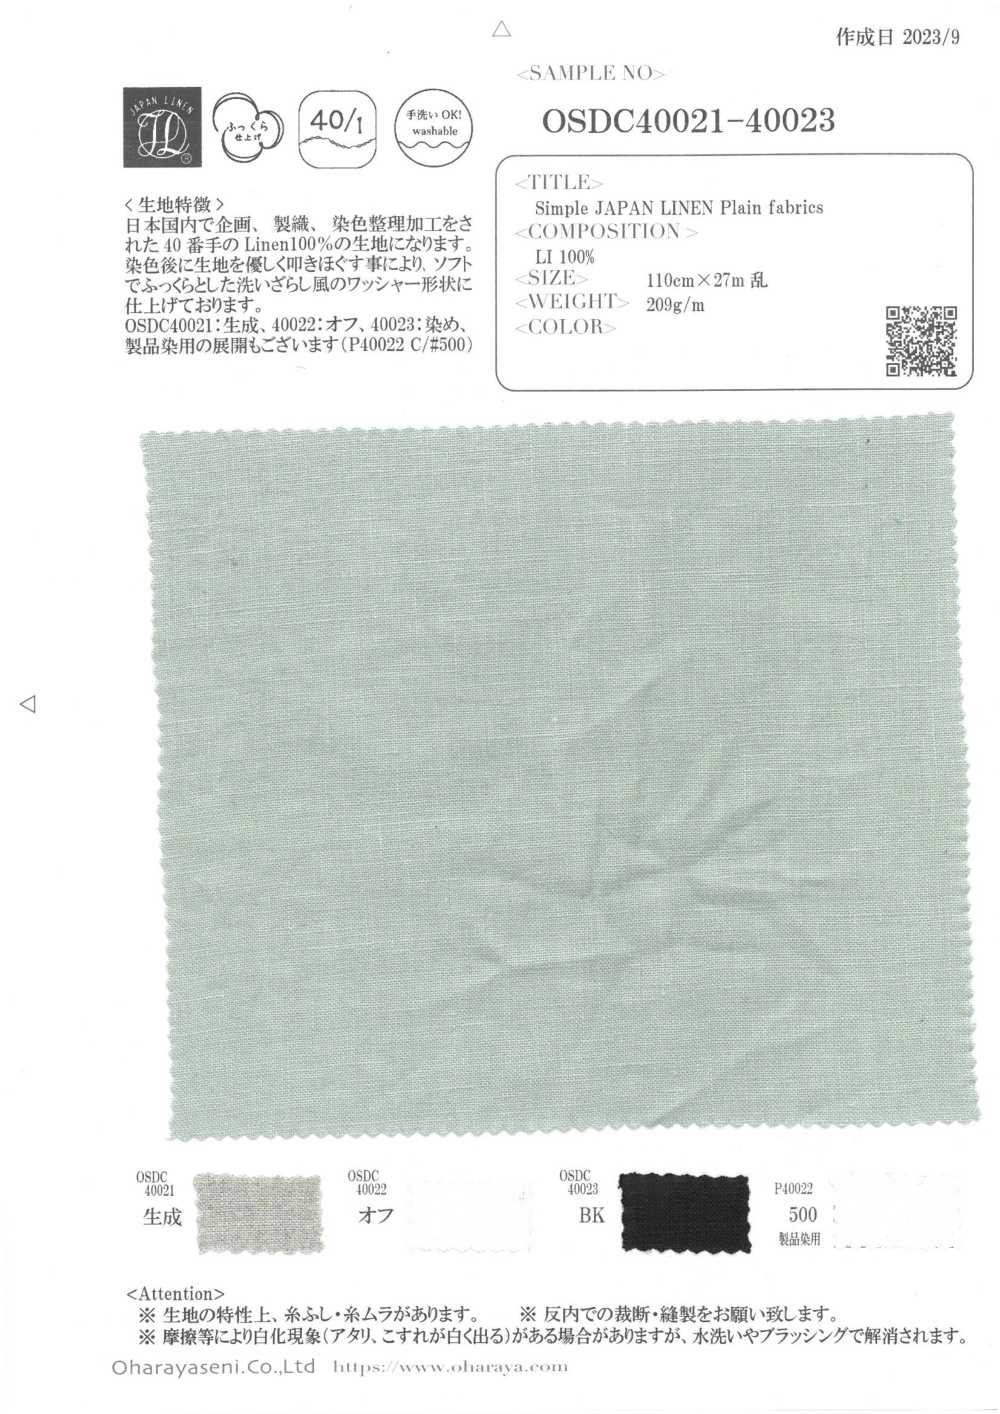 OSDC40022 Tessuti Semplici JAPAN LINO In Tinta Unita (Disattivato)[Tessile / Tessuto] Oharayaseni